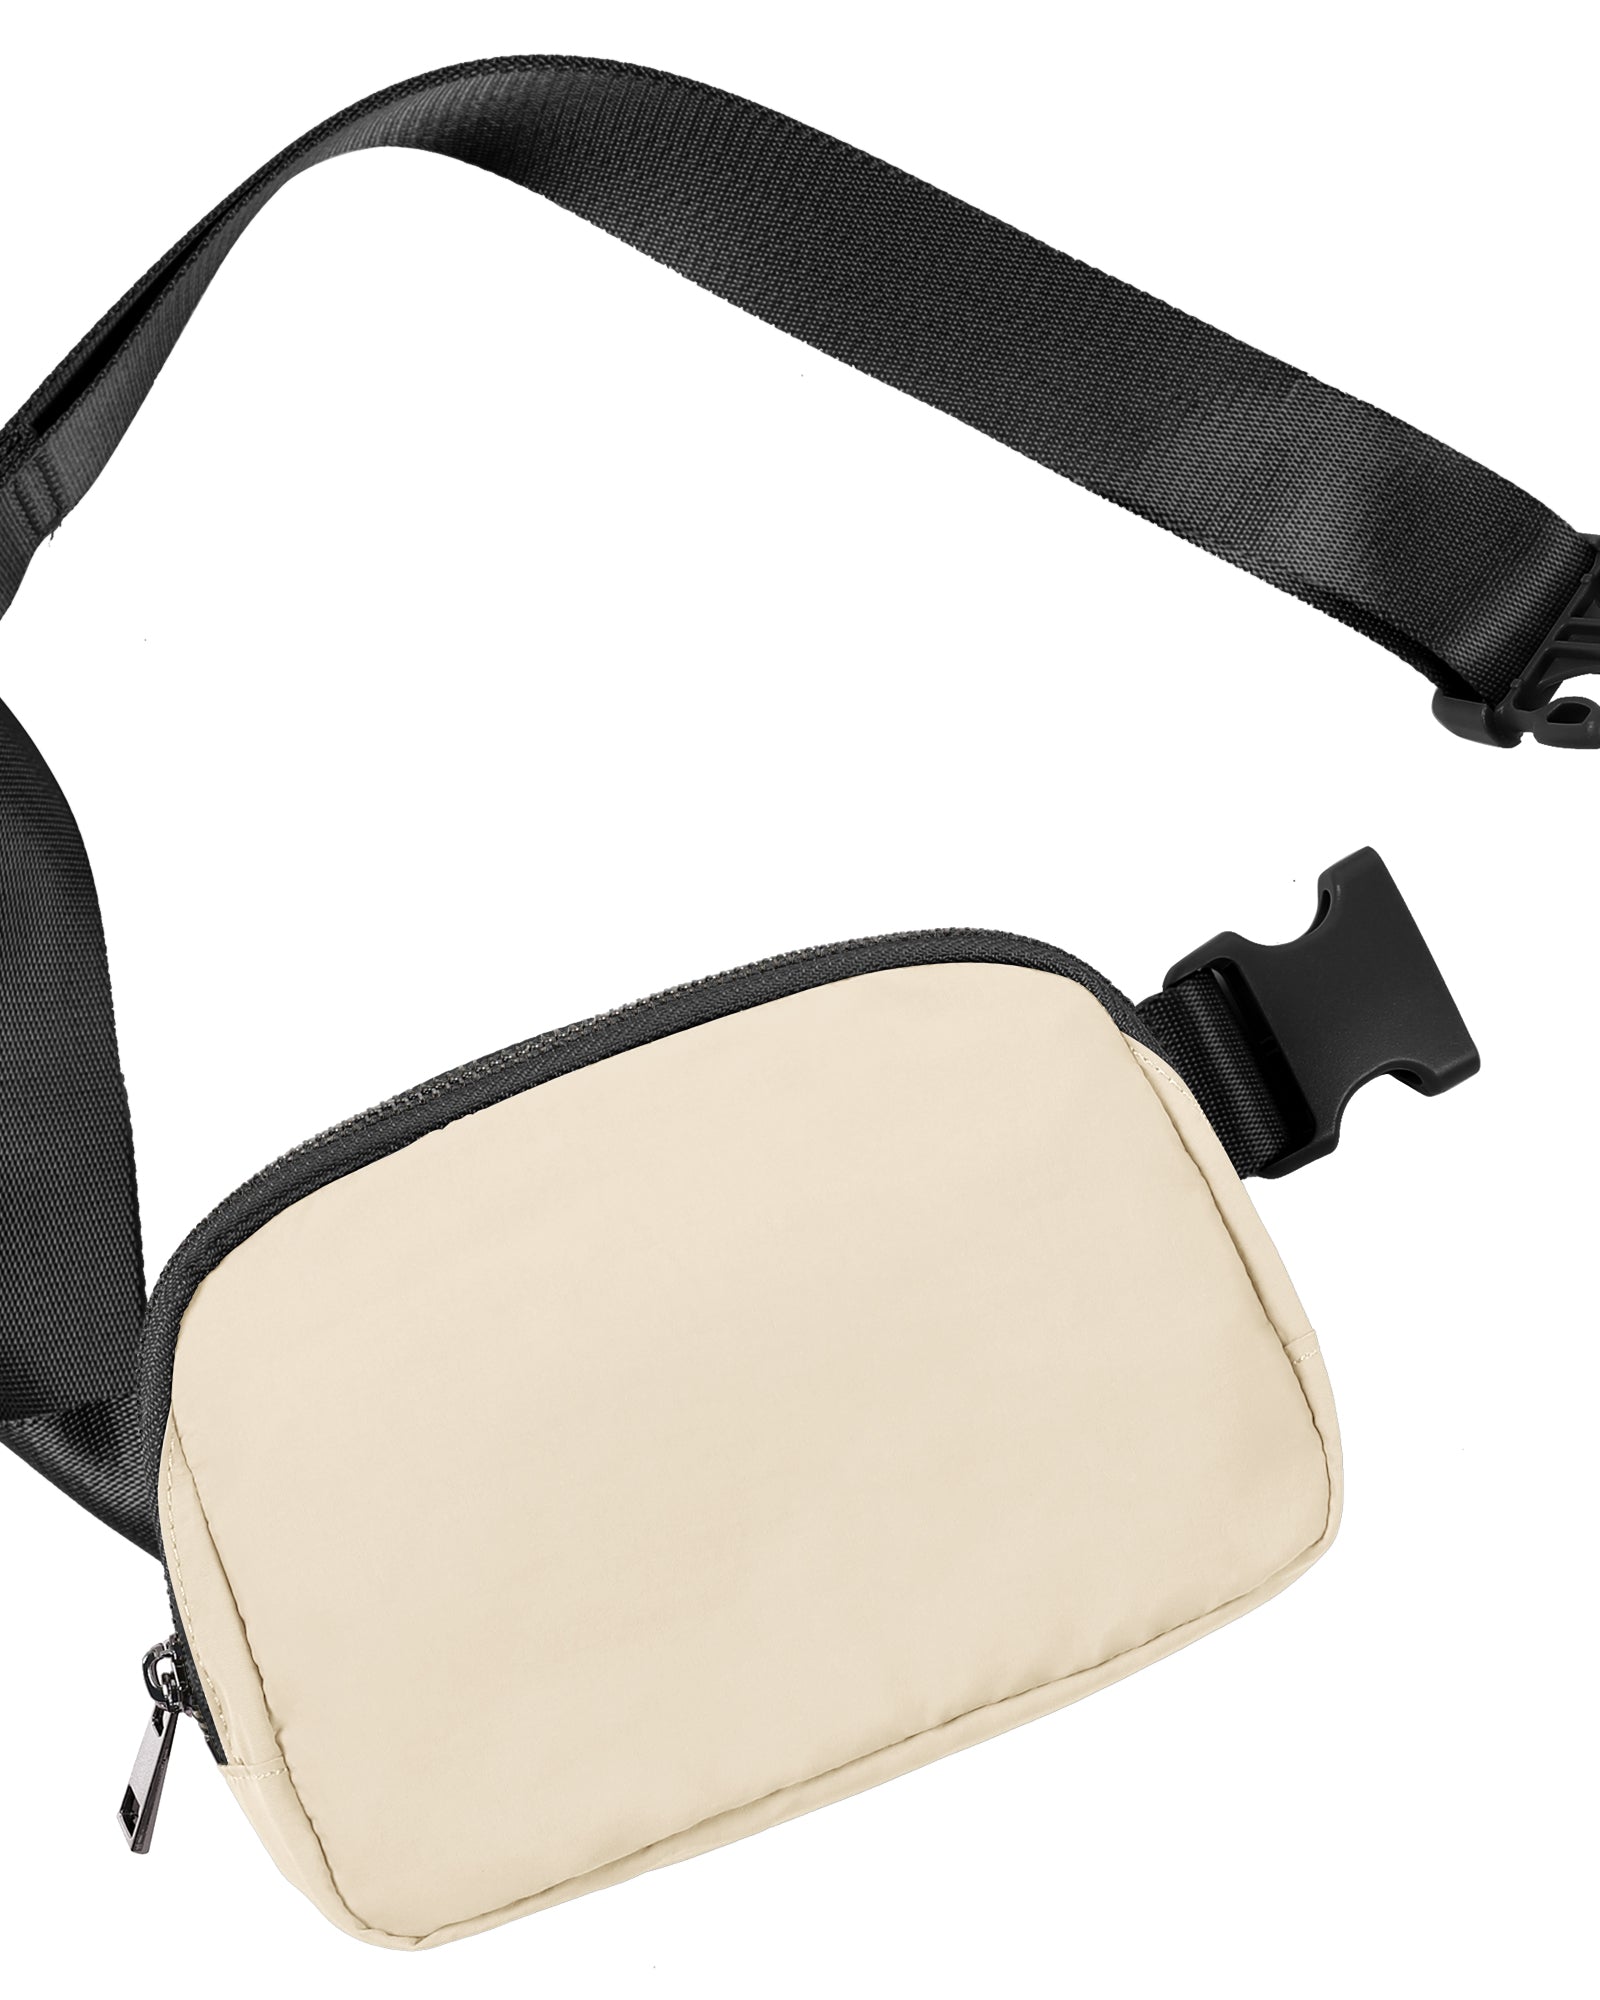 Unisex Mini Belt Bag Ivory Black 8" x 2" x 5.5" - ododos